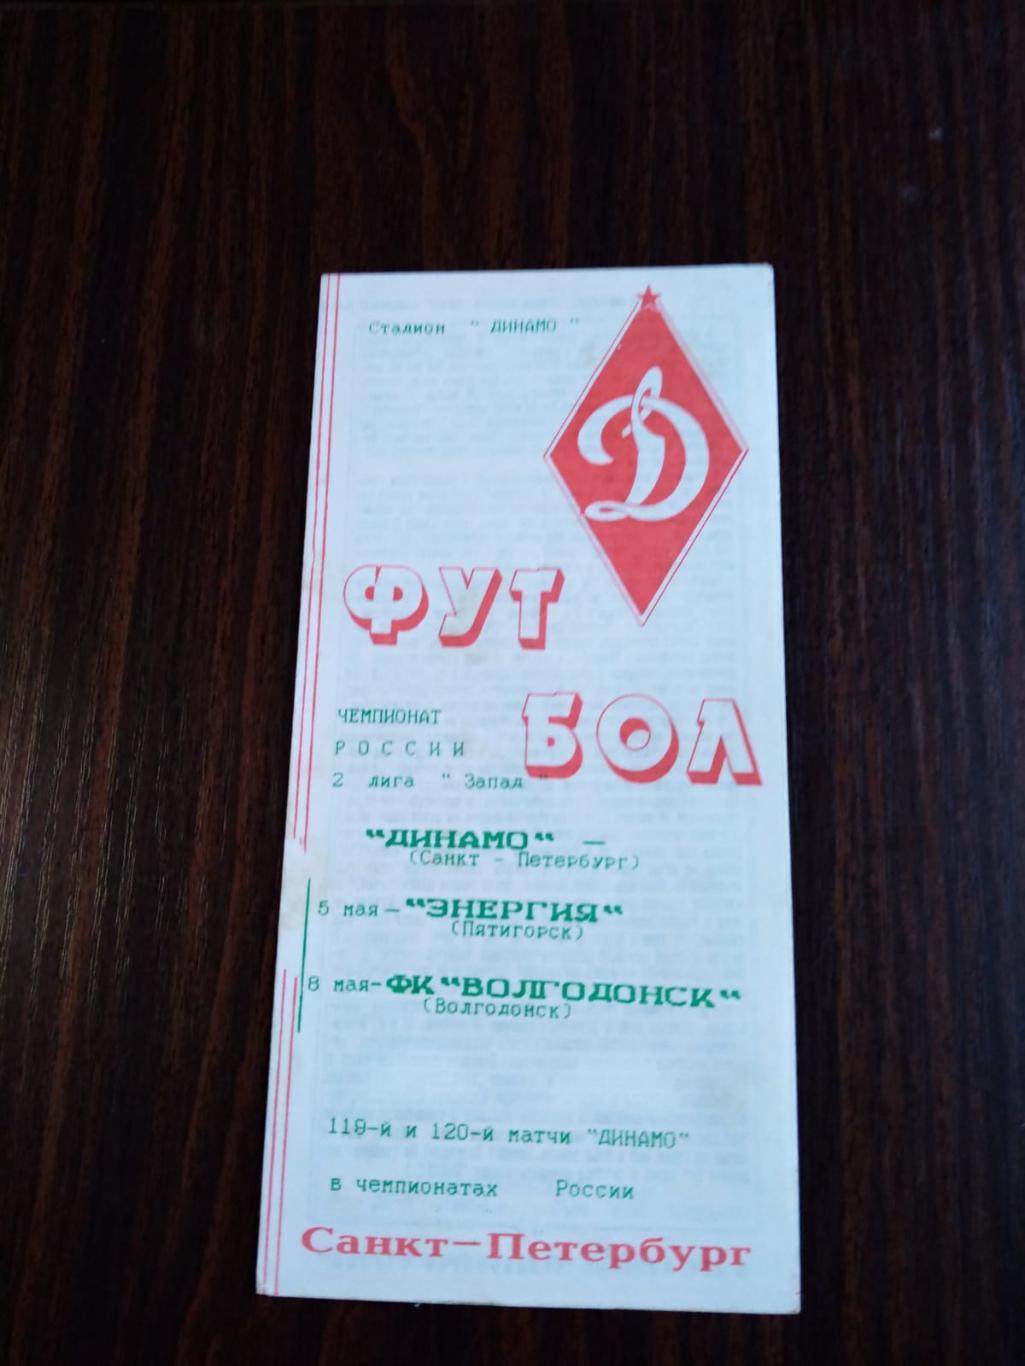 Динамо (Санкт-Петербург) - Энергия (Пятигорск), Волгодонск 05-08.05.1996